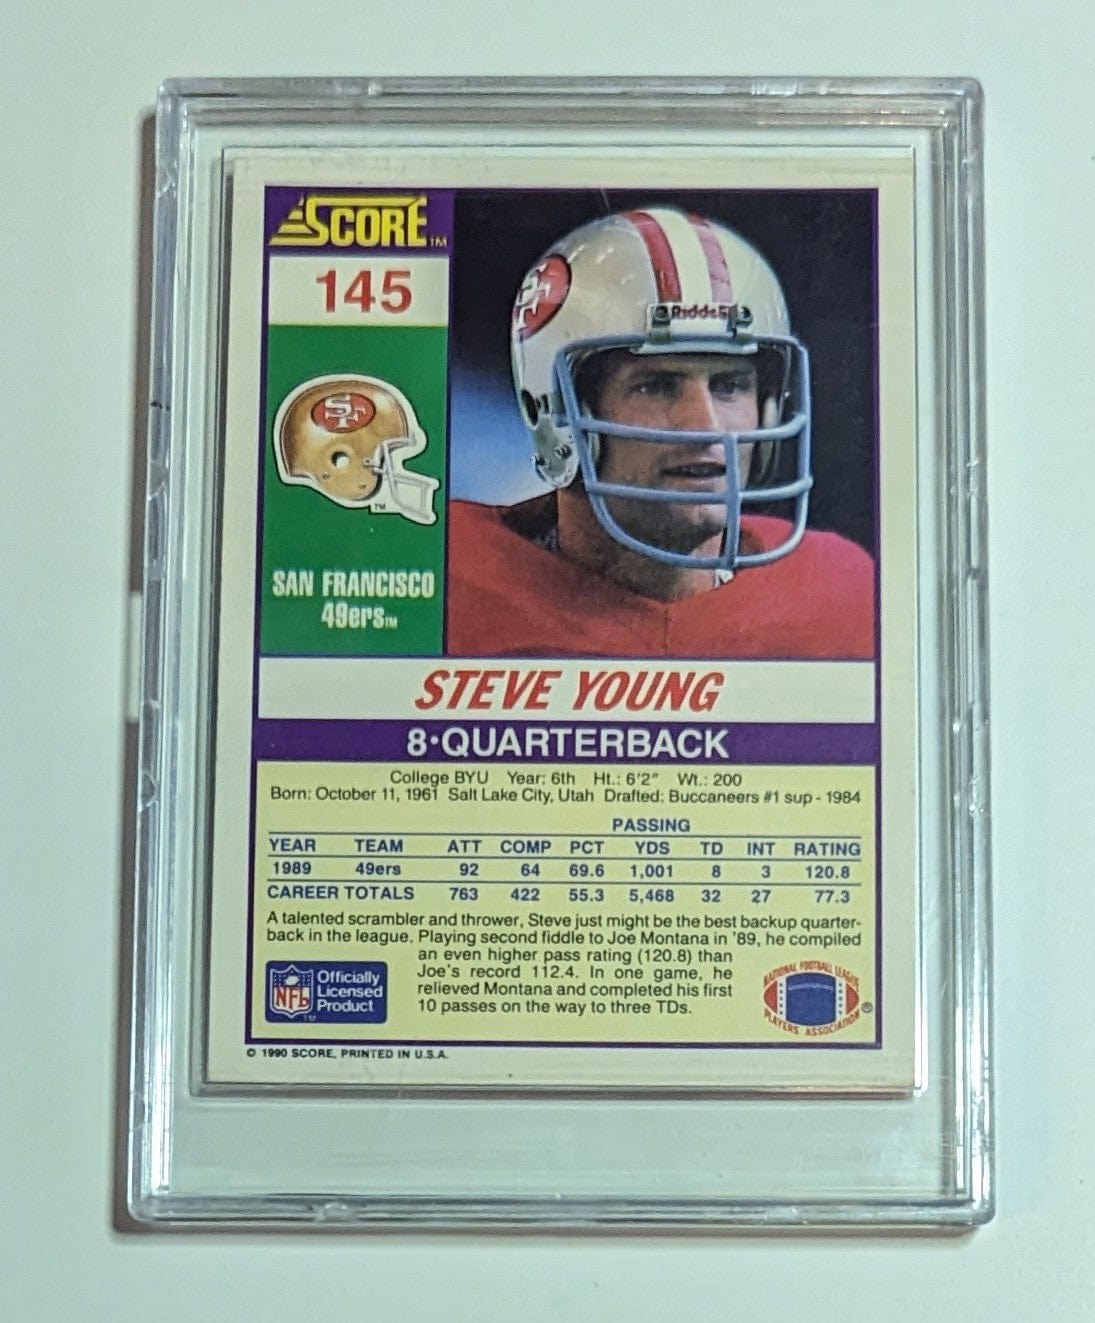 FIINR Football Card 1990 Score Steve Young Football Card #145 - Mint Condition